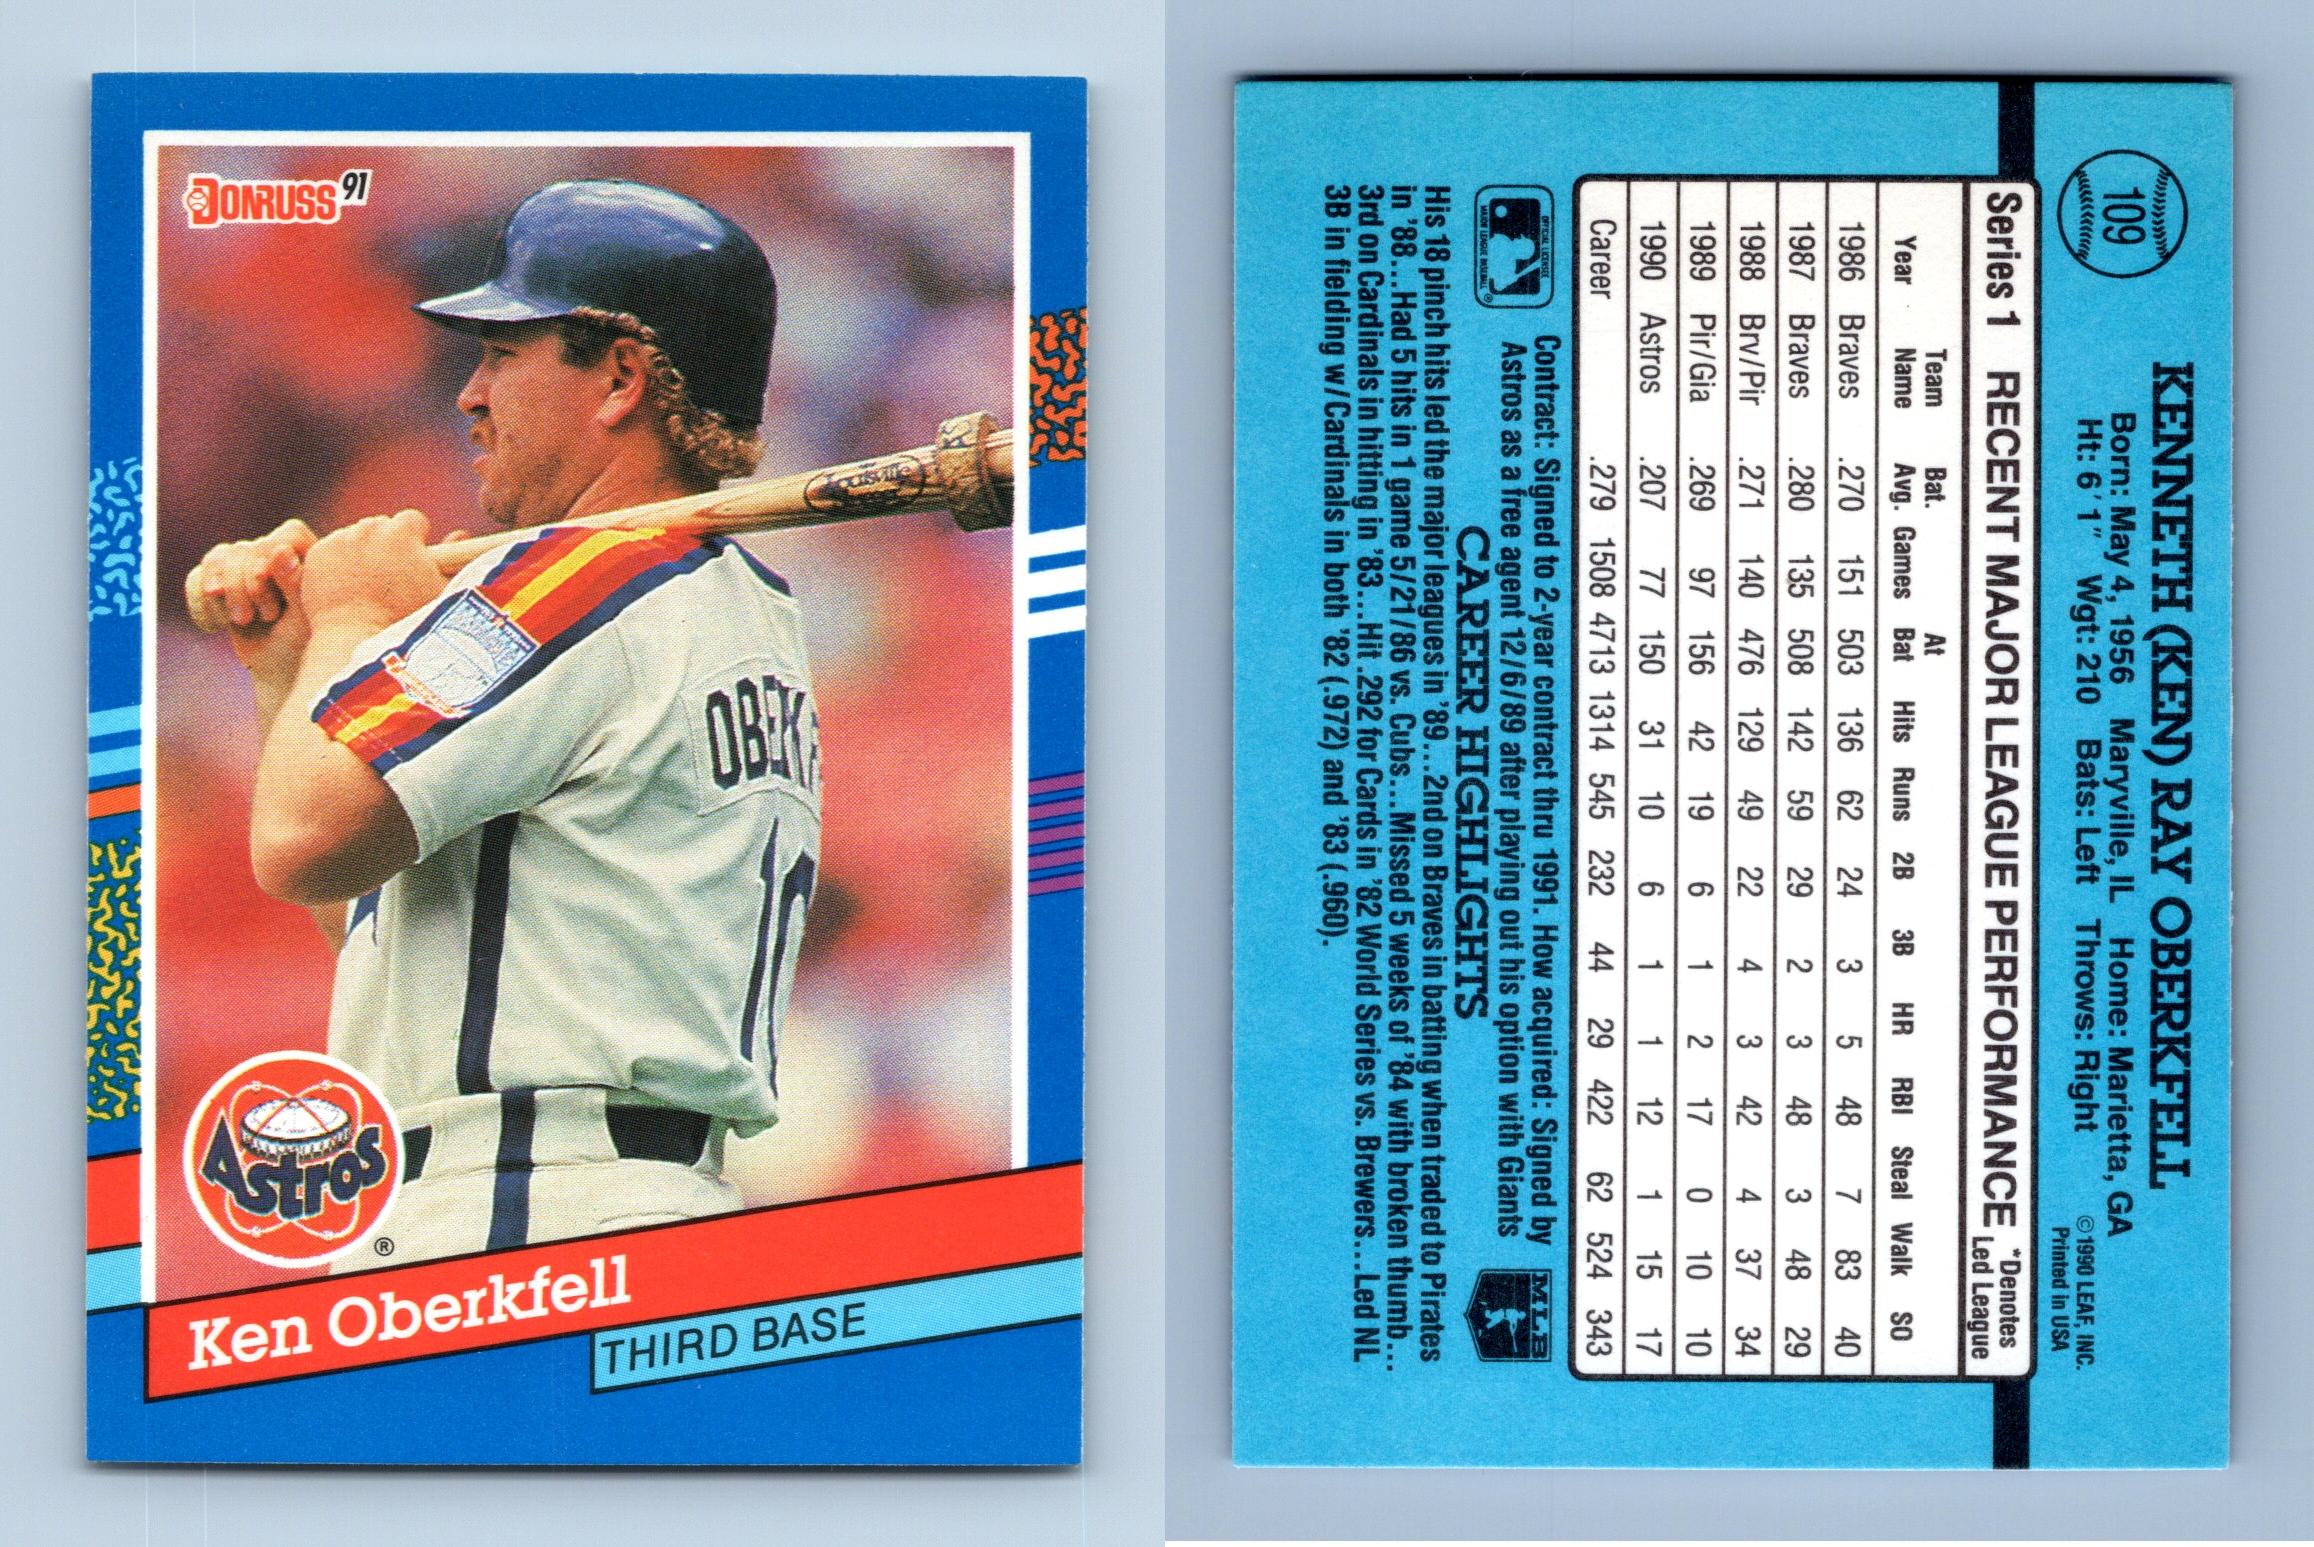 Larry Walker - Expos #359 Donruss 1991 Baseball Trading Card